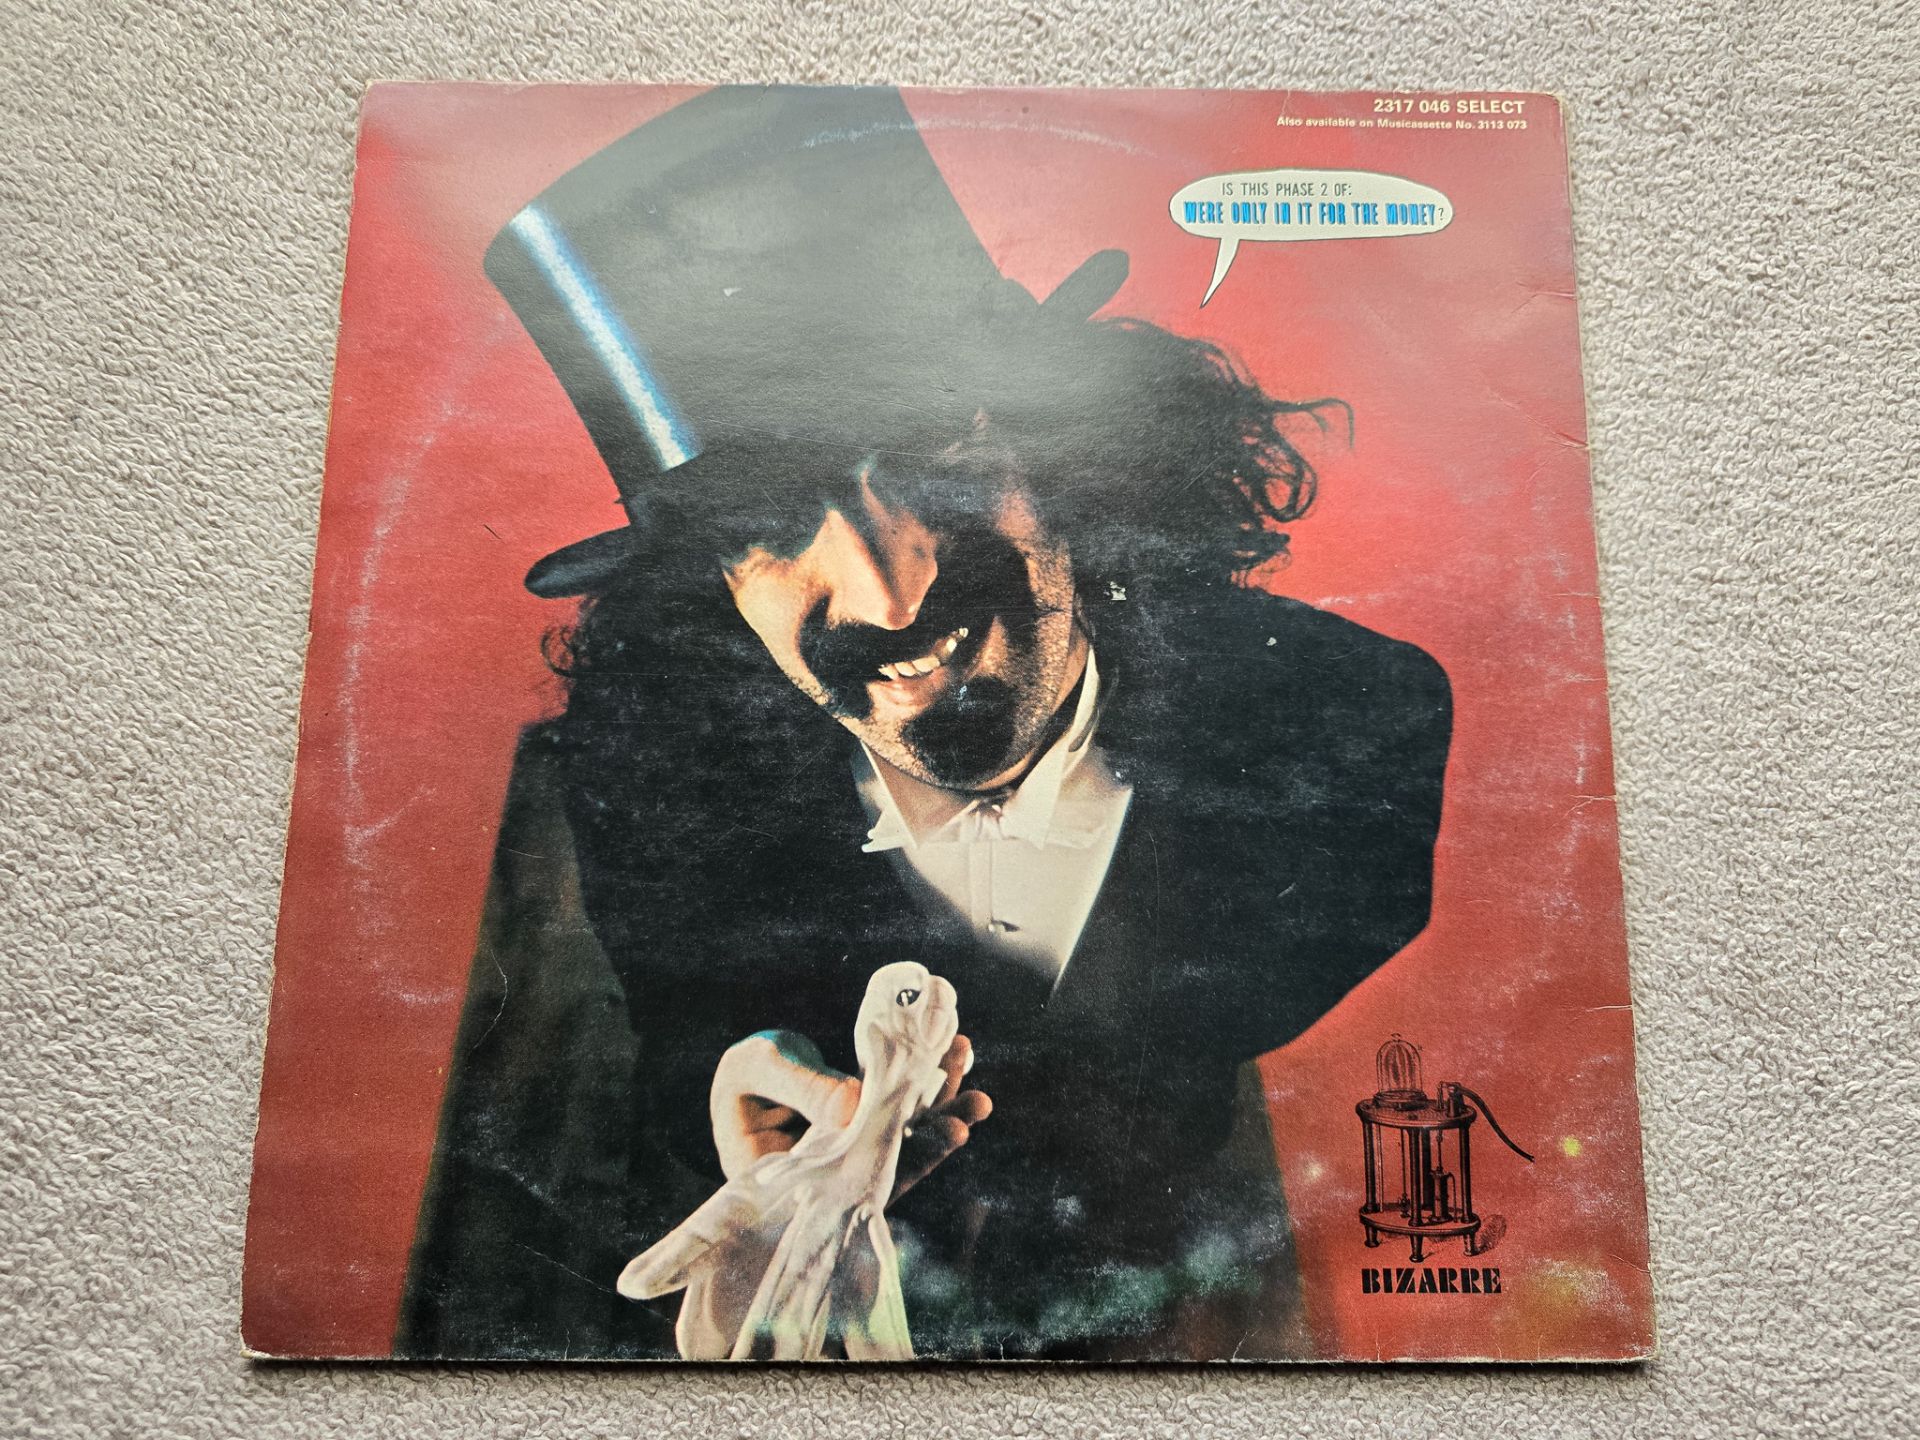 Frank Zappa - Lumpy Gravy Rare UK Verve 1972 Vinyl LP + Gatefold Sleeve - Image 2 of 6